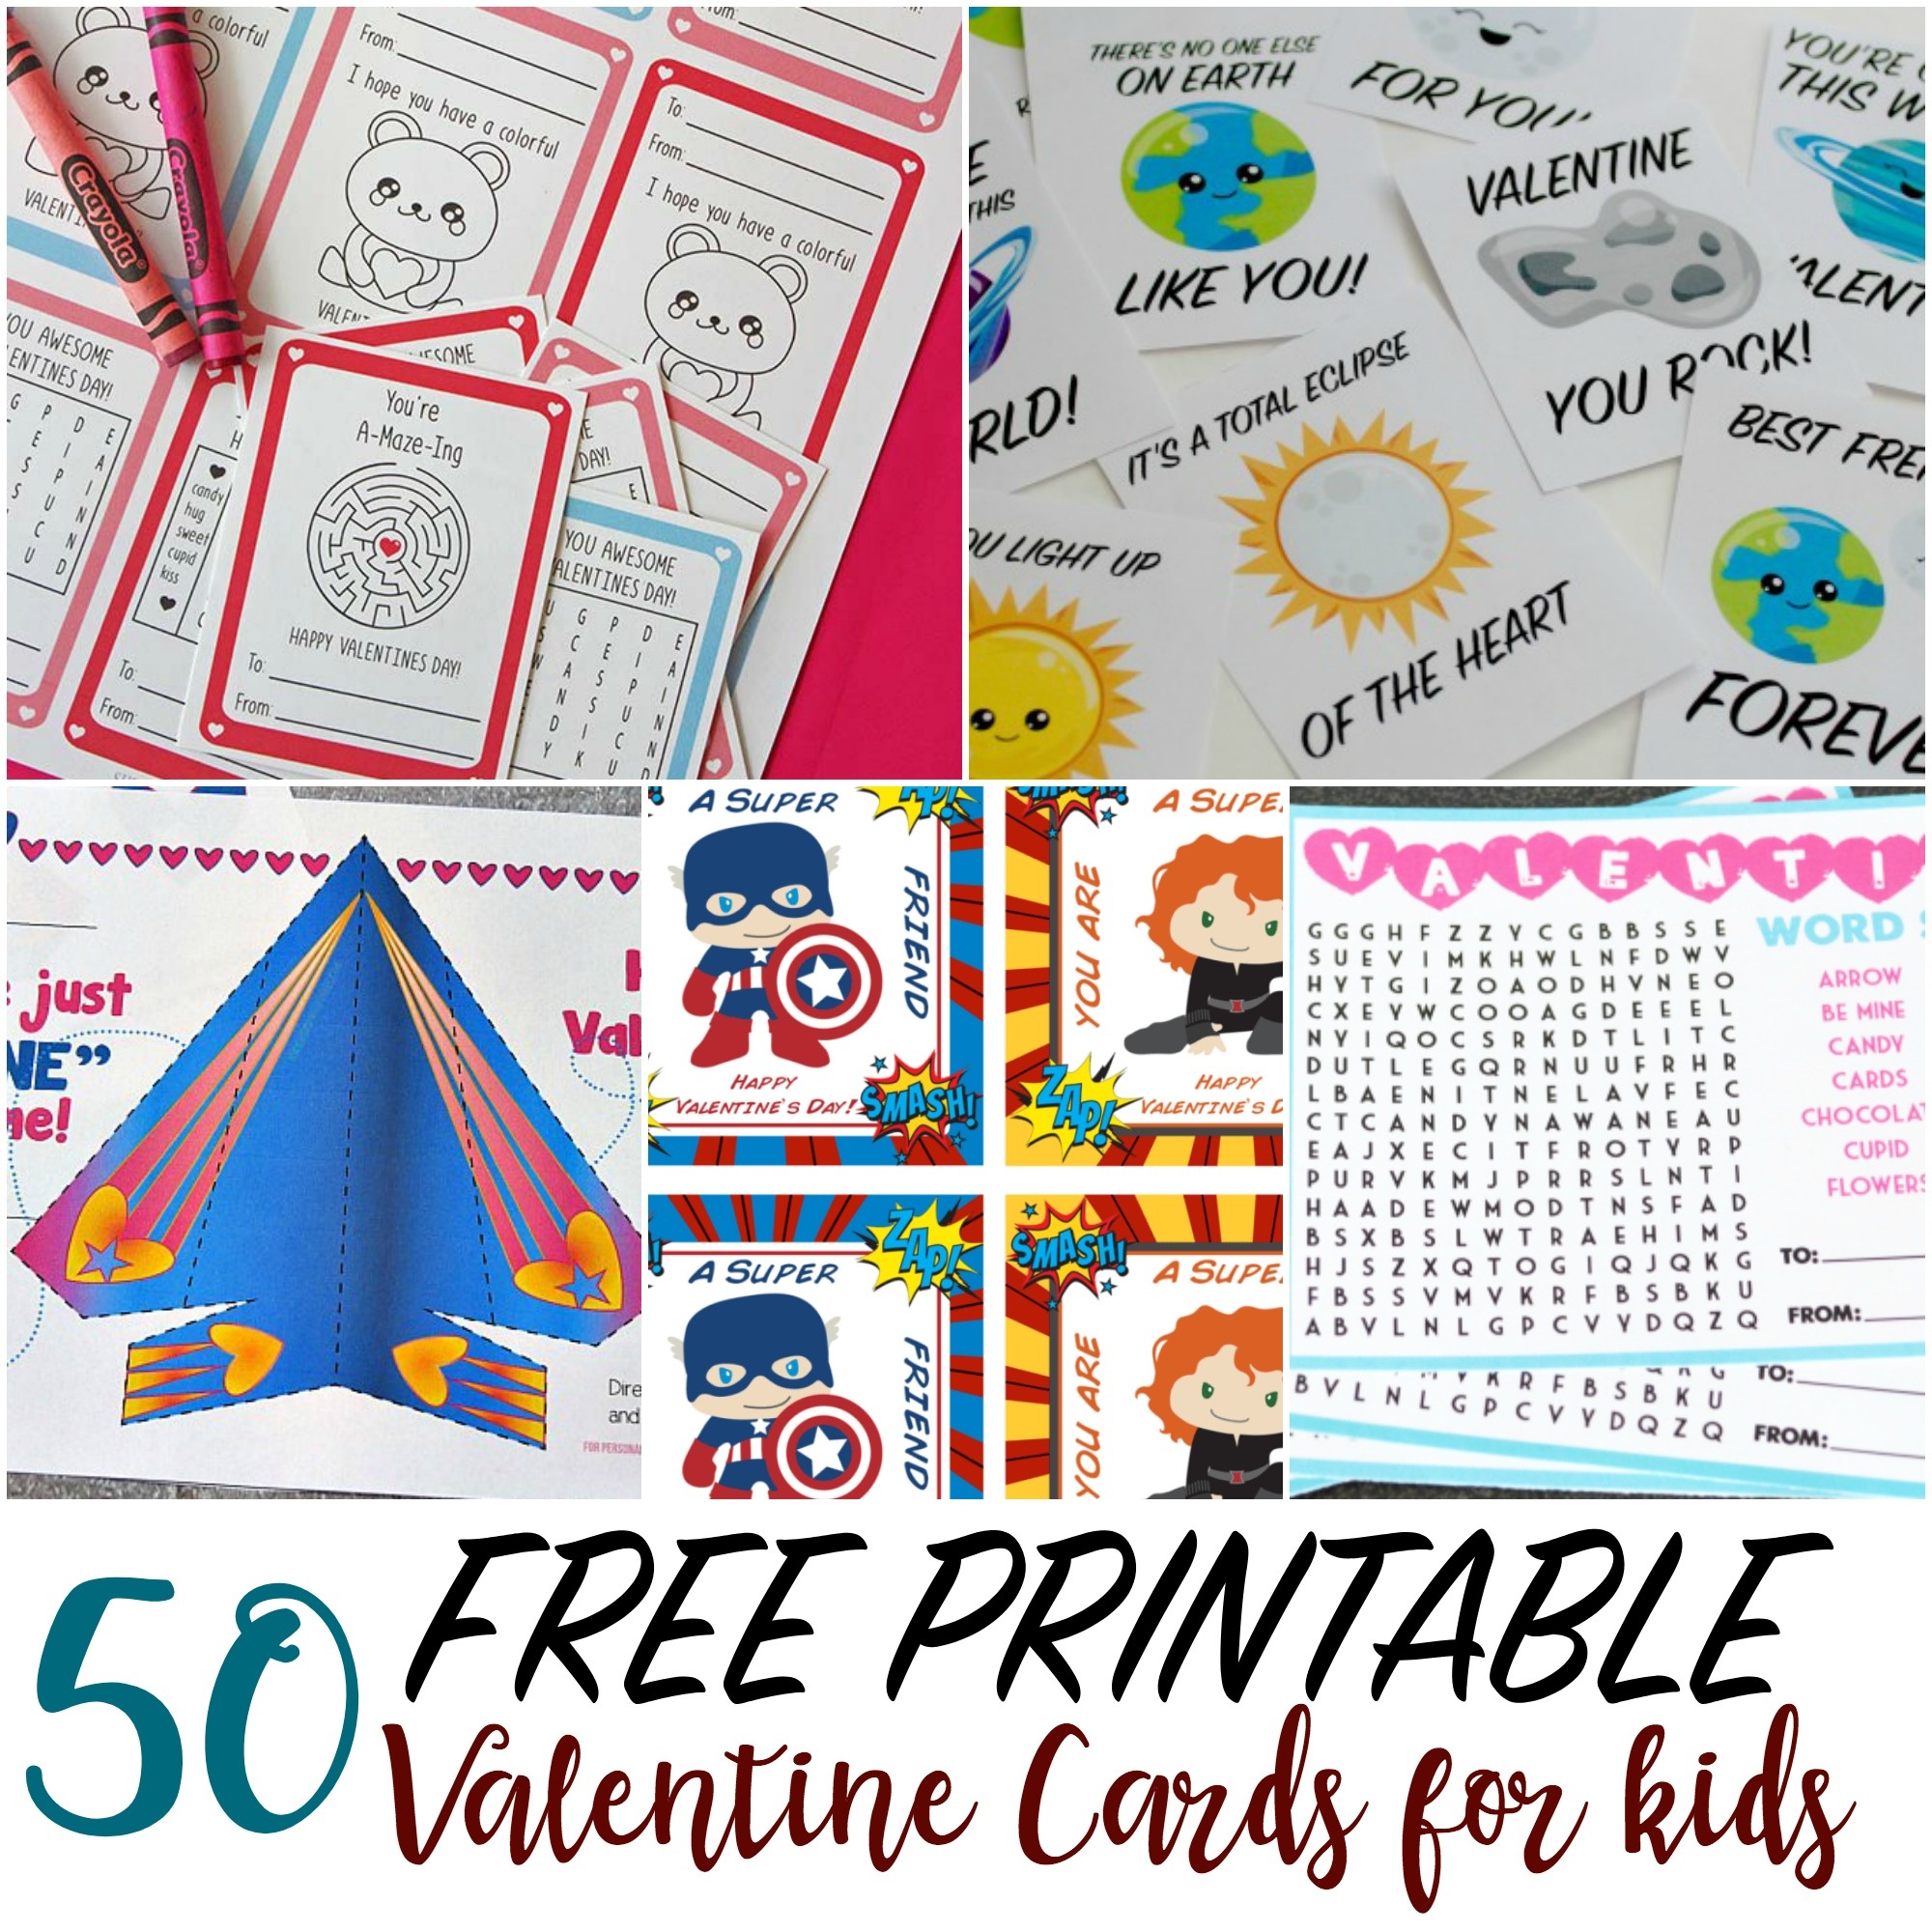 50 Printable Valentine Cards For Kids - Free Printable Valentines For Kids